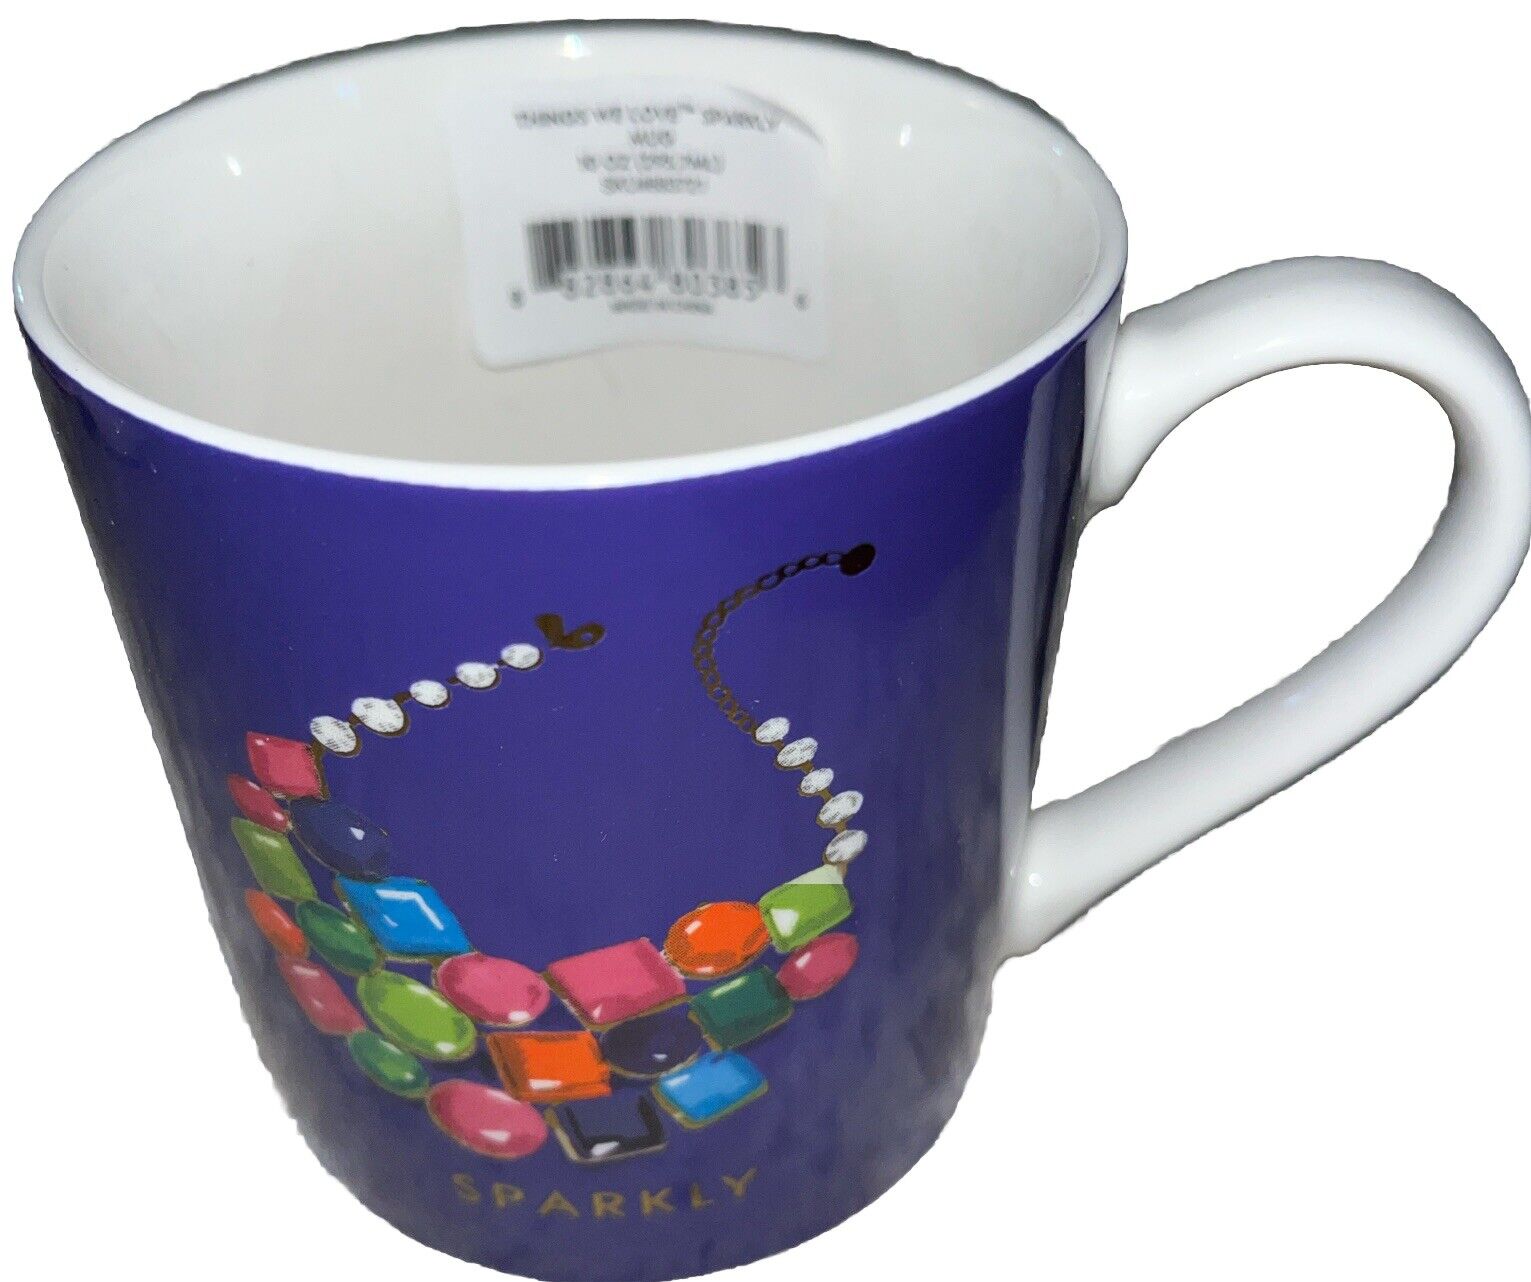 Kate Spade Lenox Coffee Cup Mug “Sparkly” Purple Necklace Gem Lights Up Room